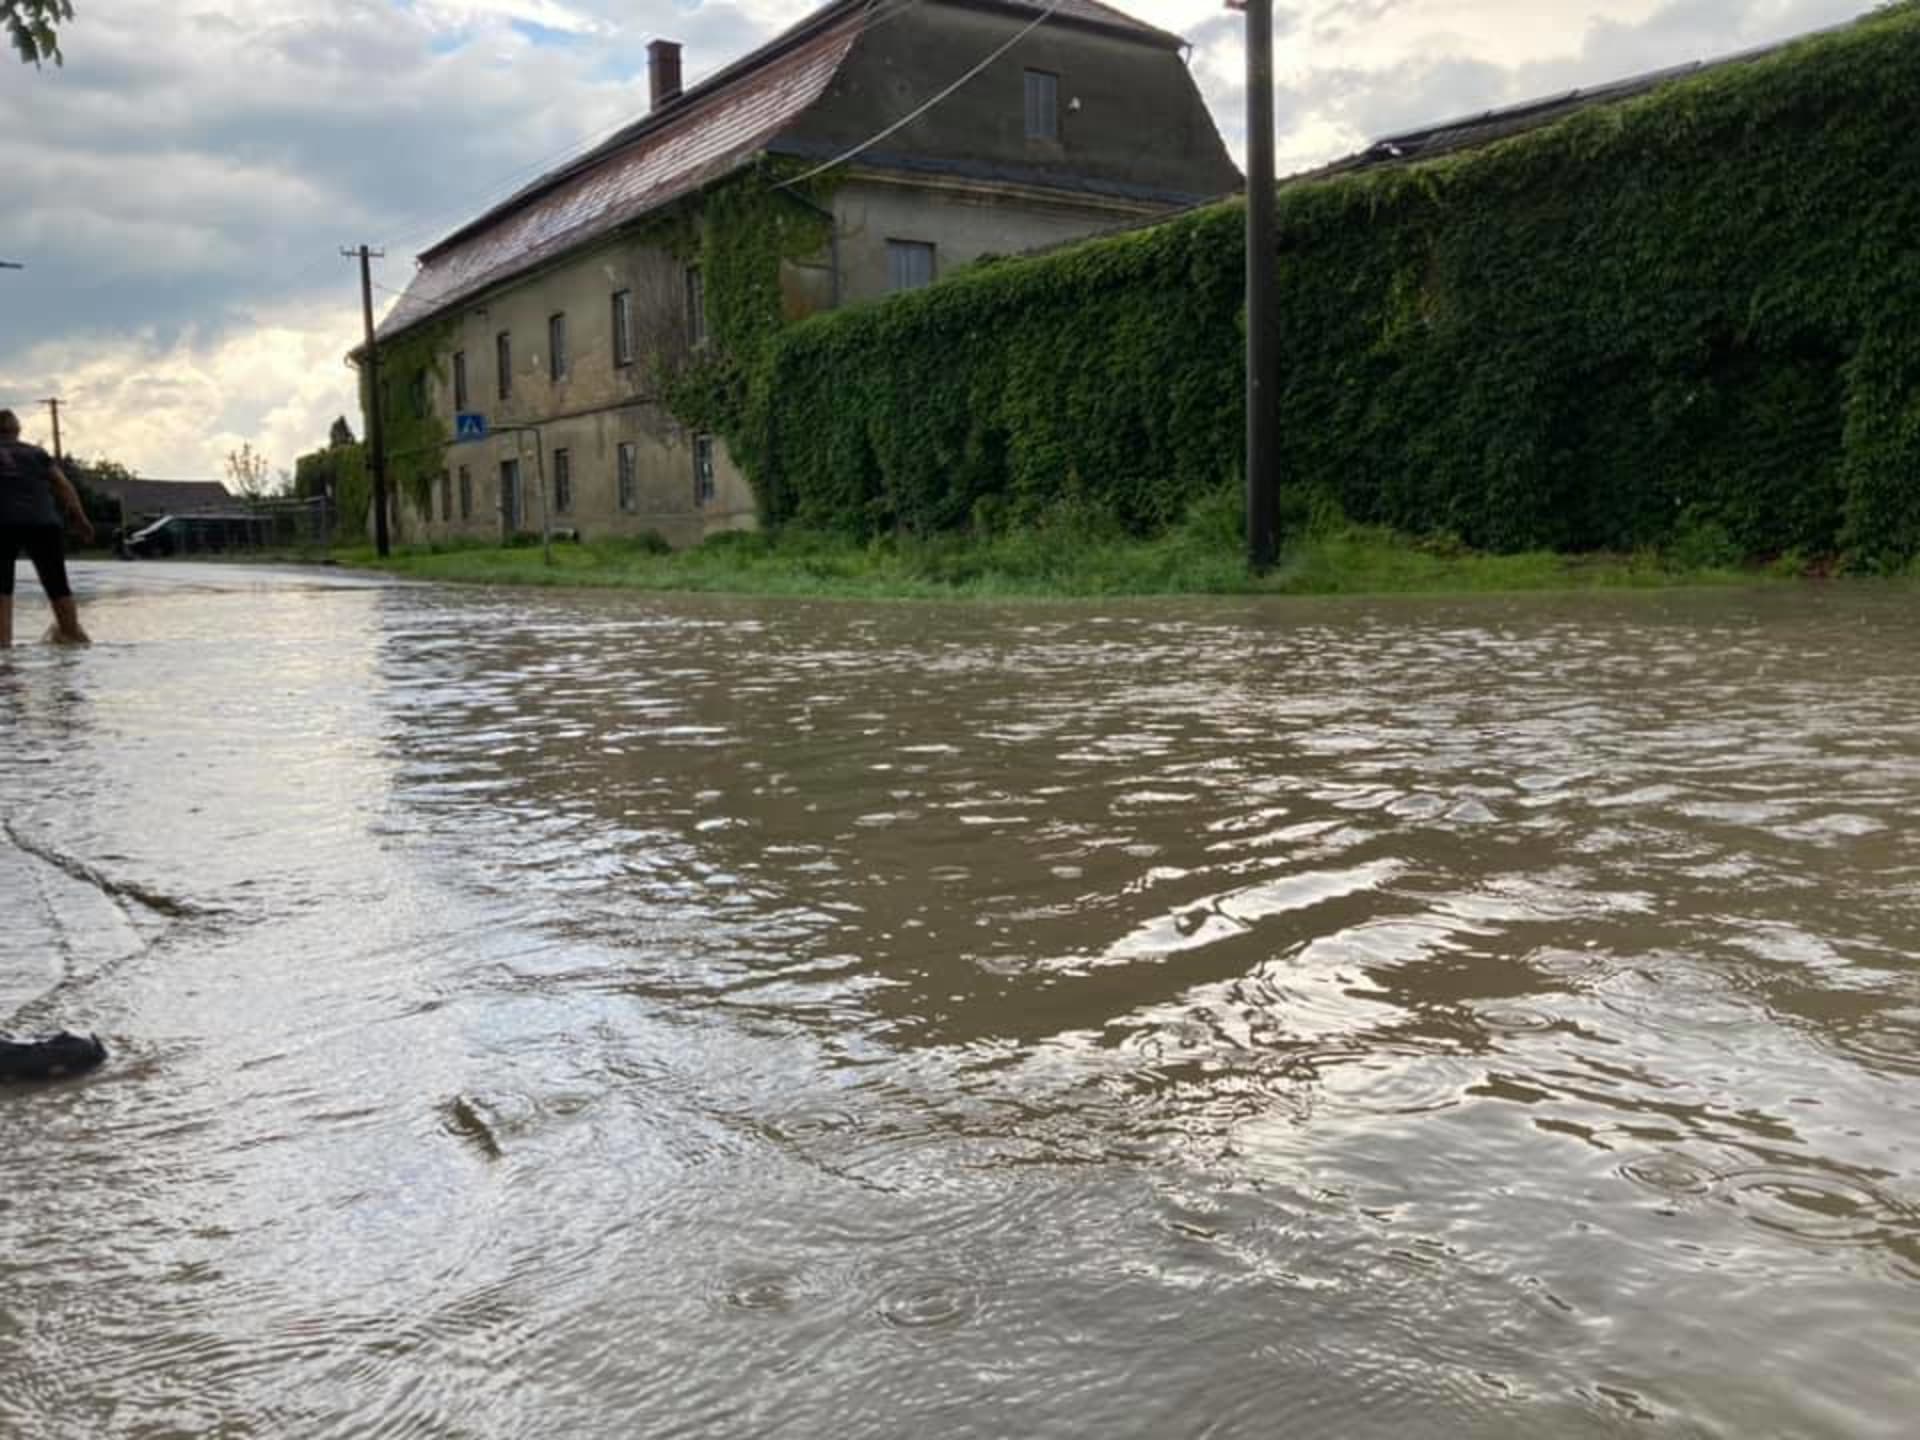 Voda zatopila ulici v Litomyšli (zdroj: Nikola Ondráčková)